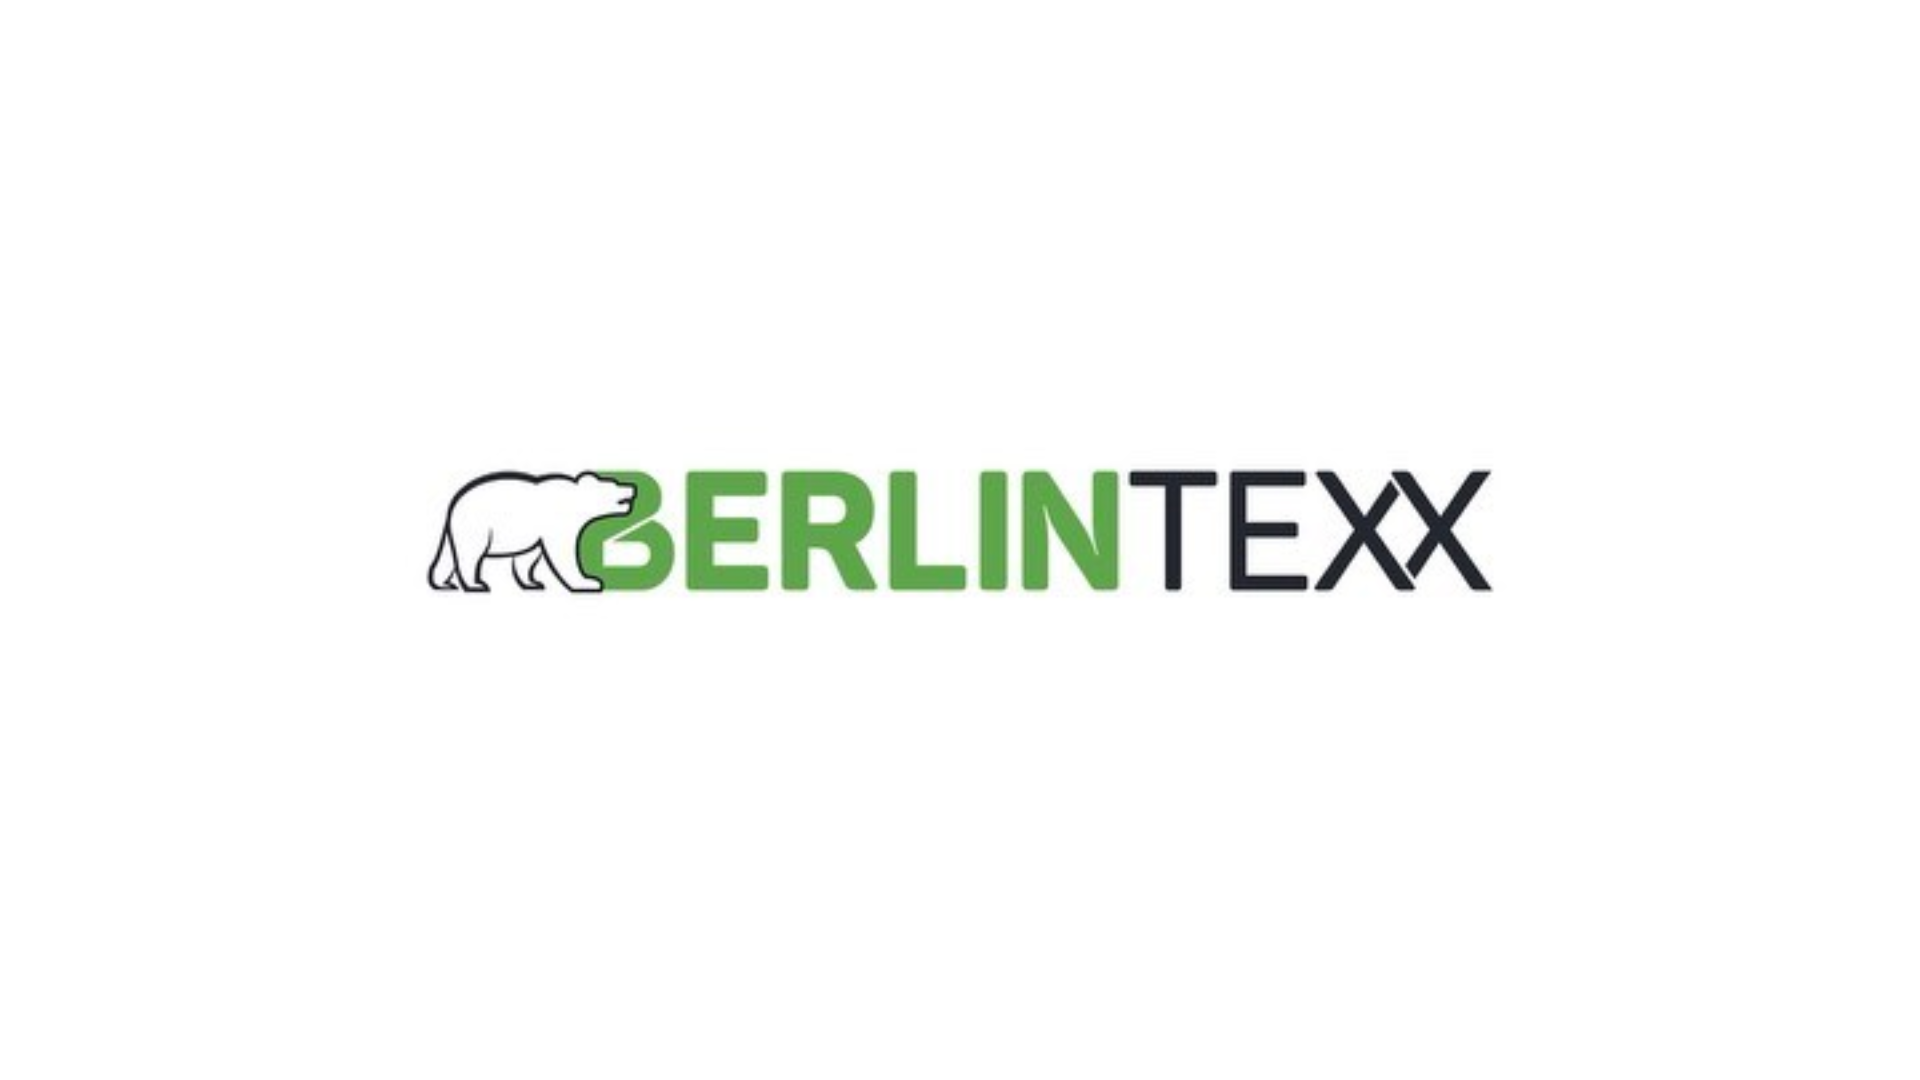 Berlintexx